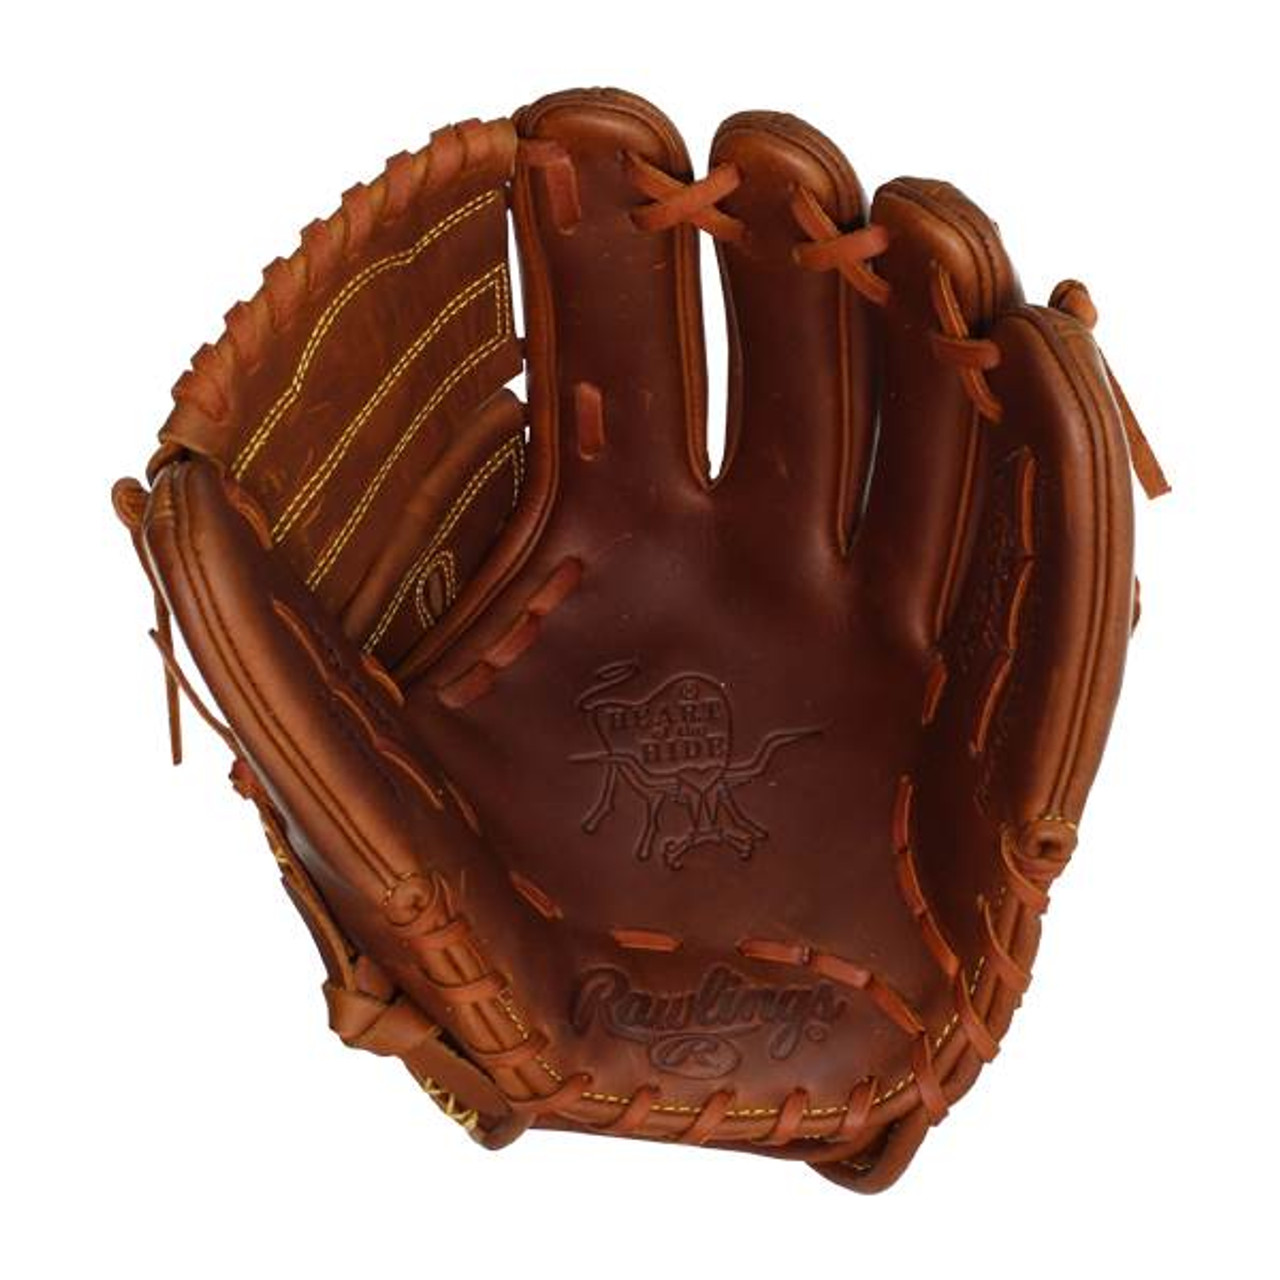 PRO205-9TIFS PRO205-9TIFS Rawlings Heart of The Hide 11.75 Baseball Glove 